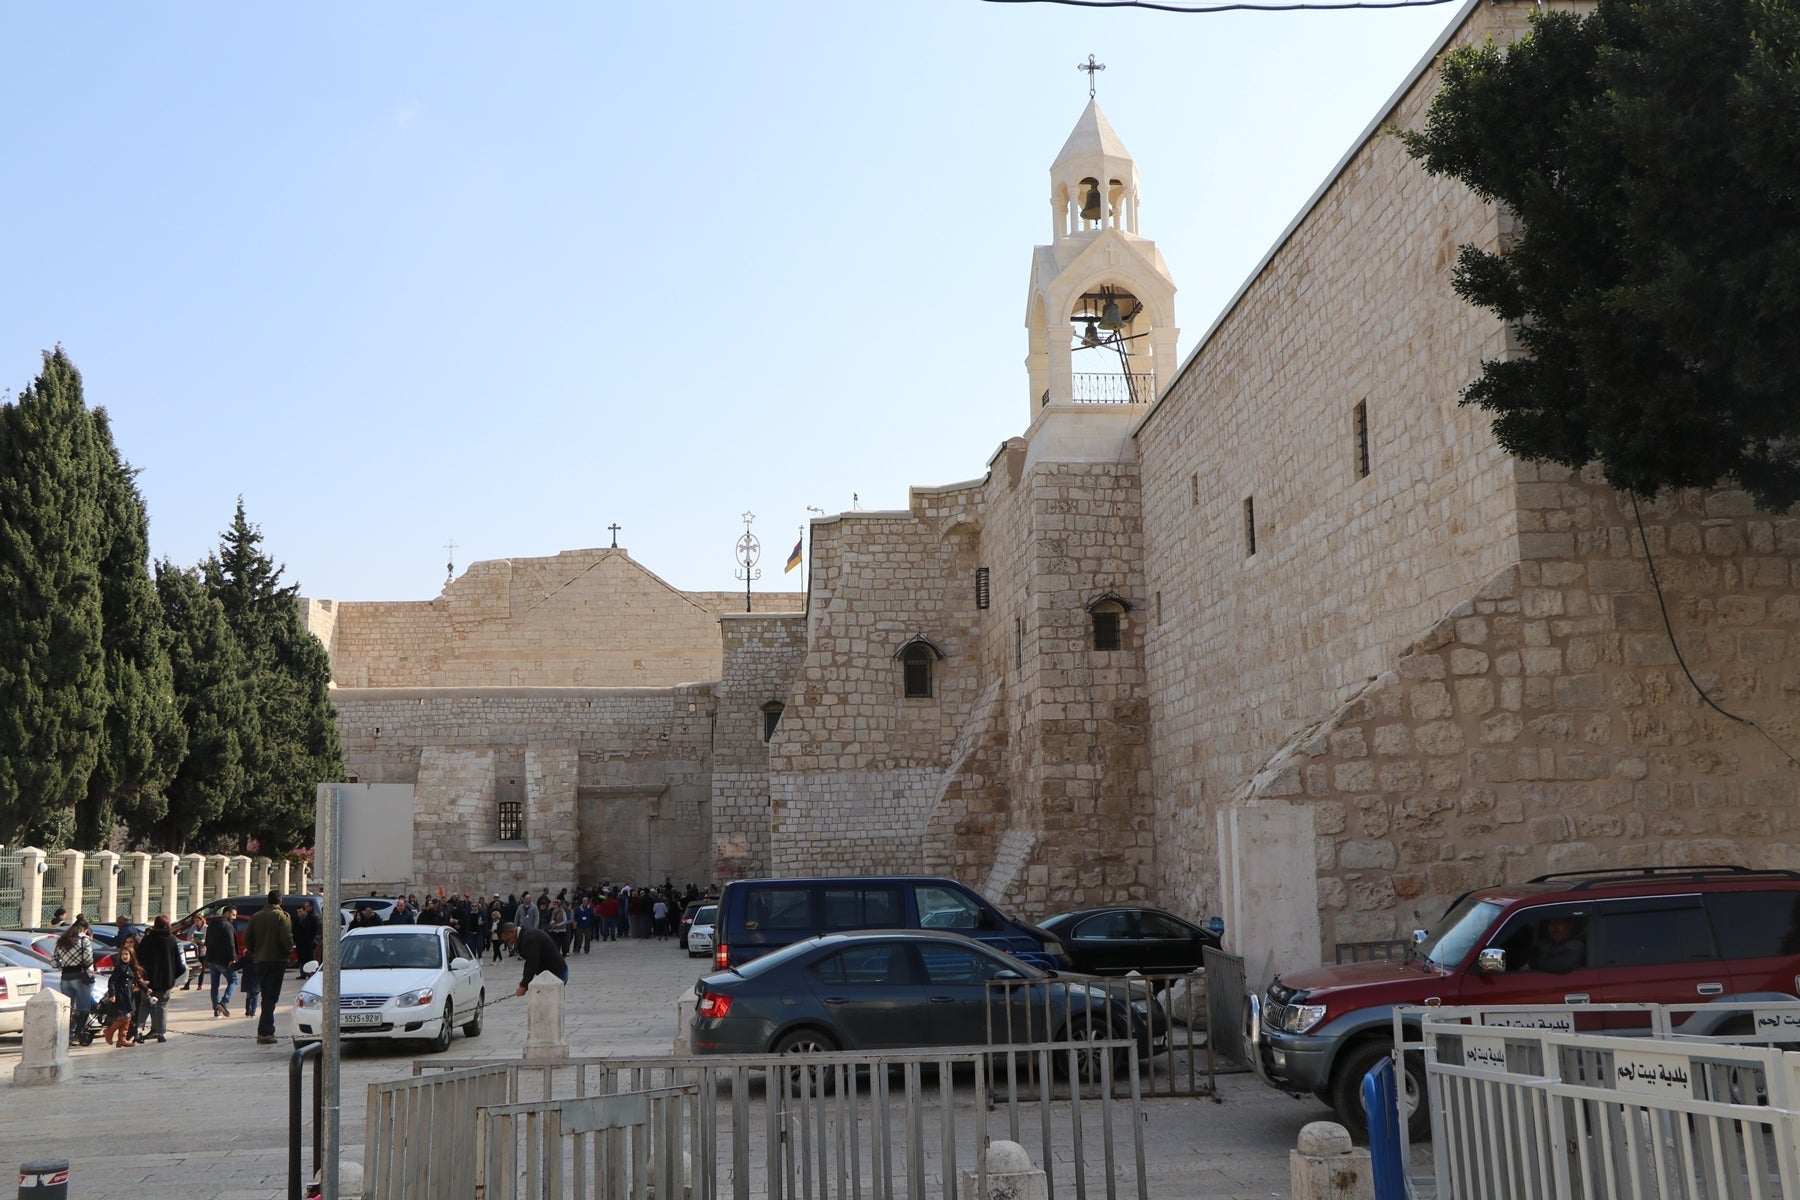 Bethlehem & Jerusalem - Shared Tour